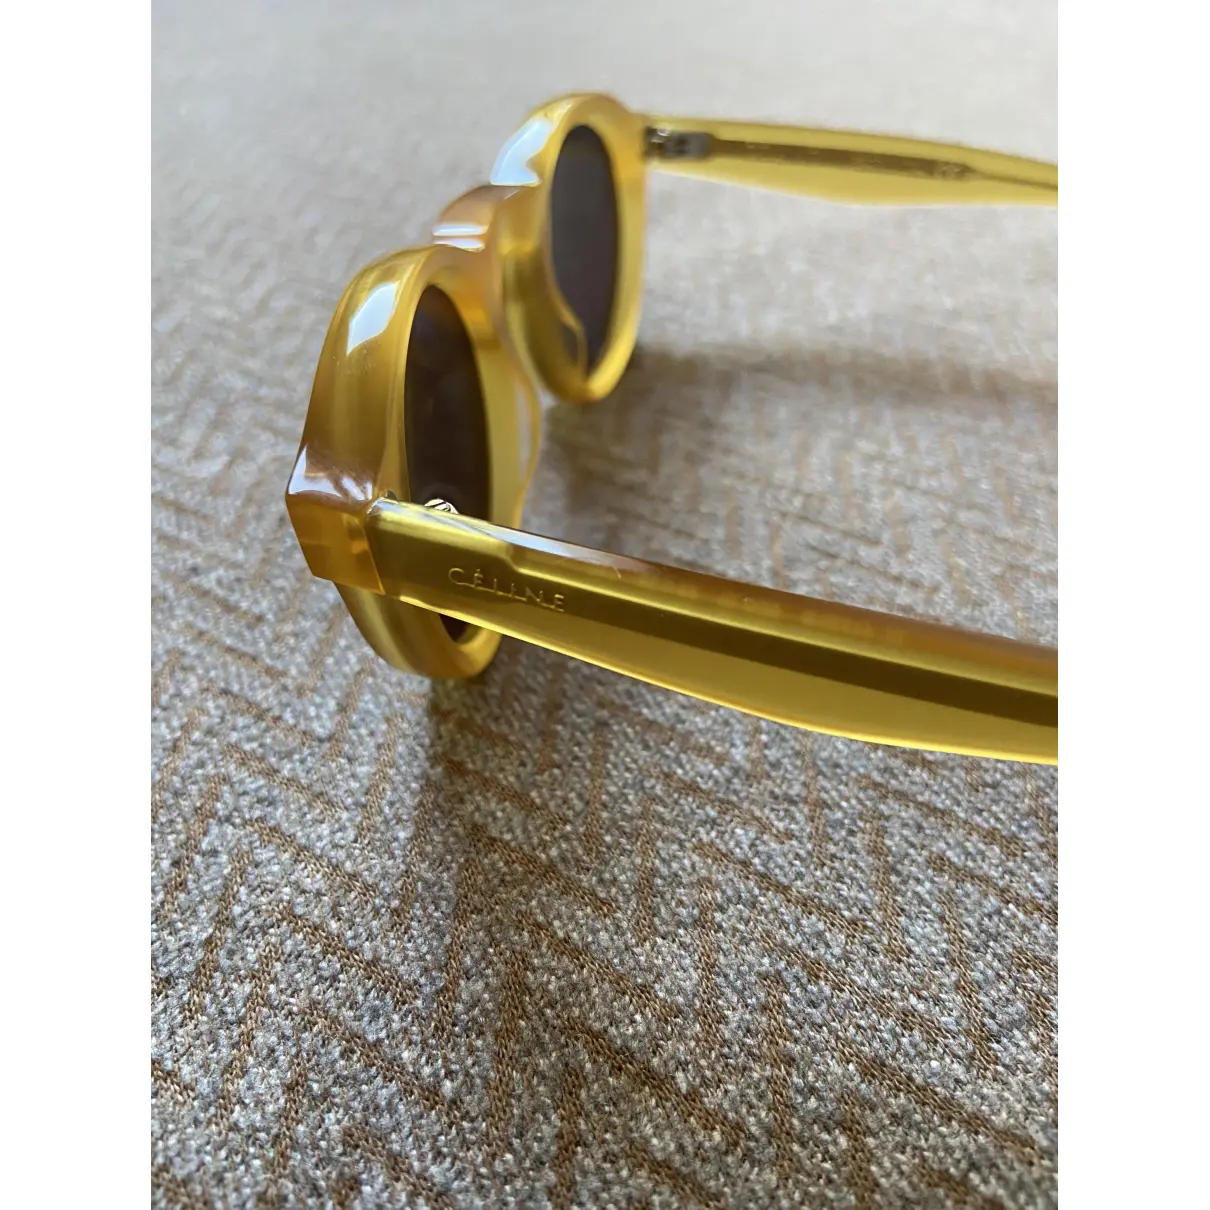 Buy Celine Bevel Round sunglasses online